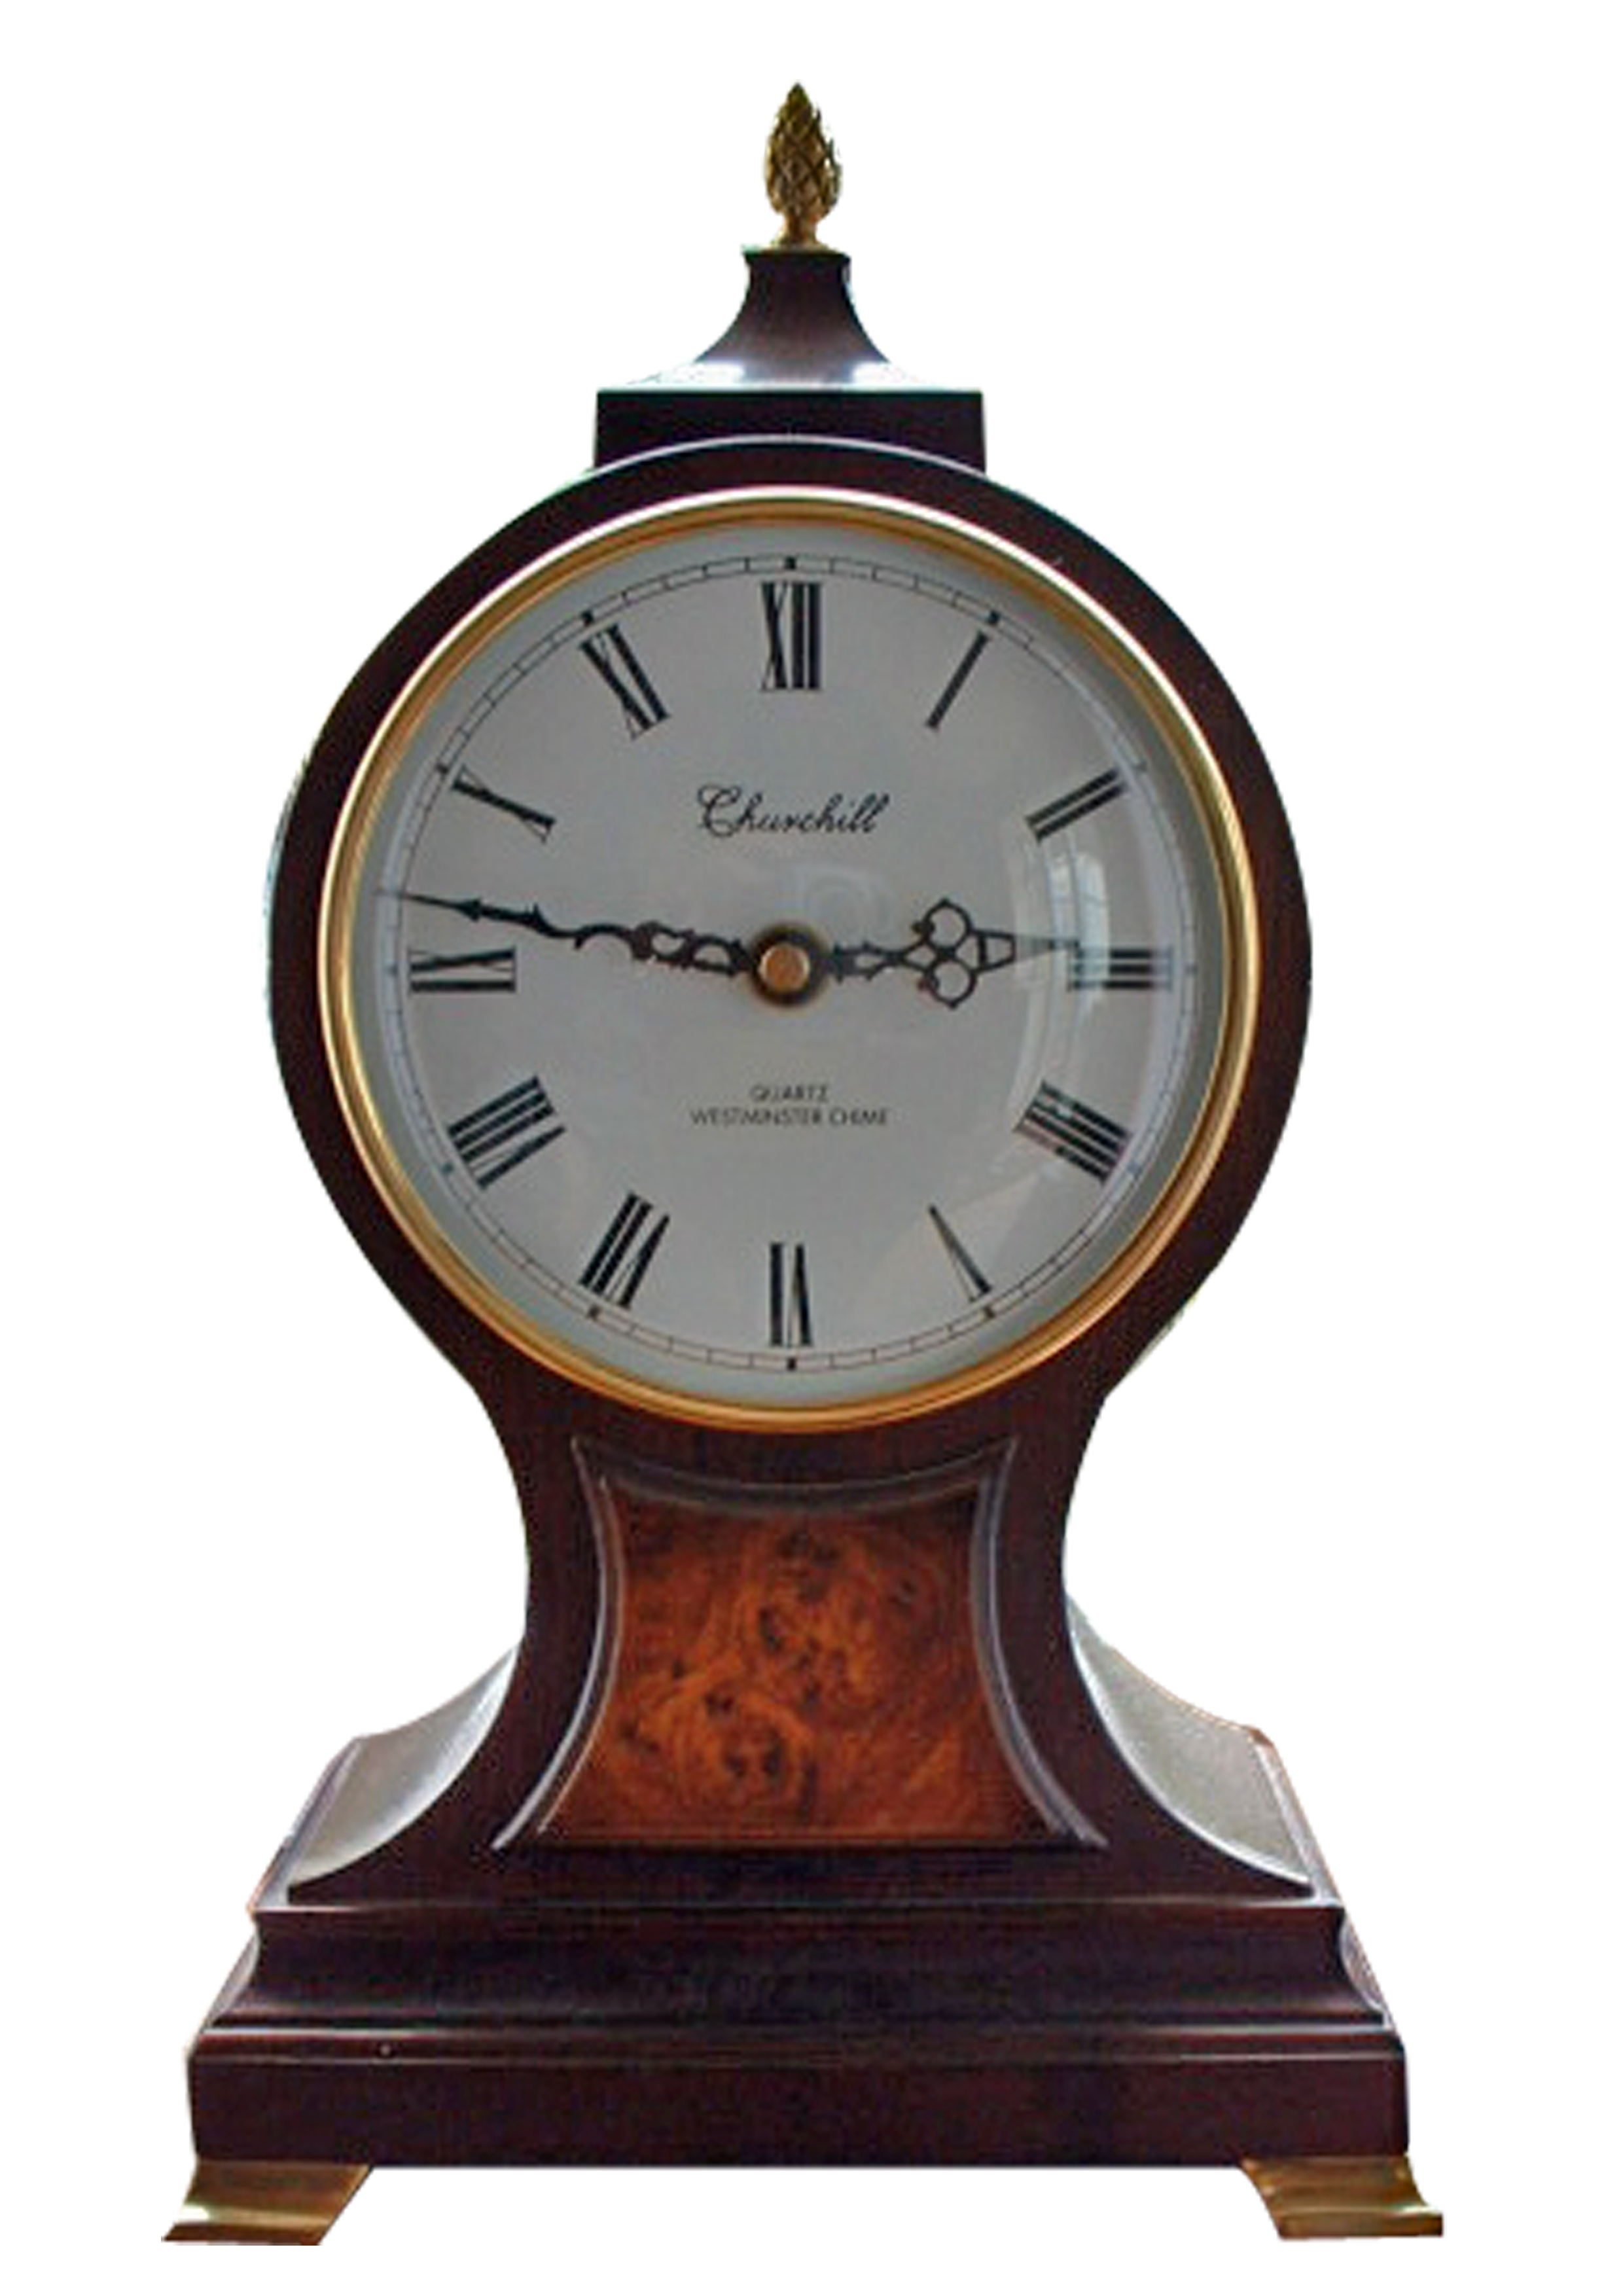 Old Clock by PaulineMoss on DeviantArt